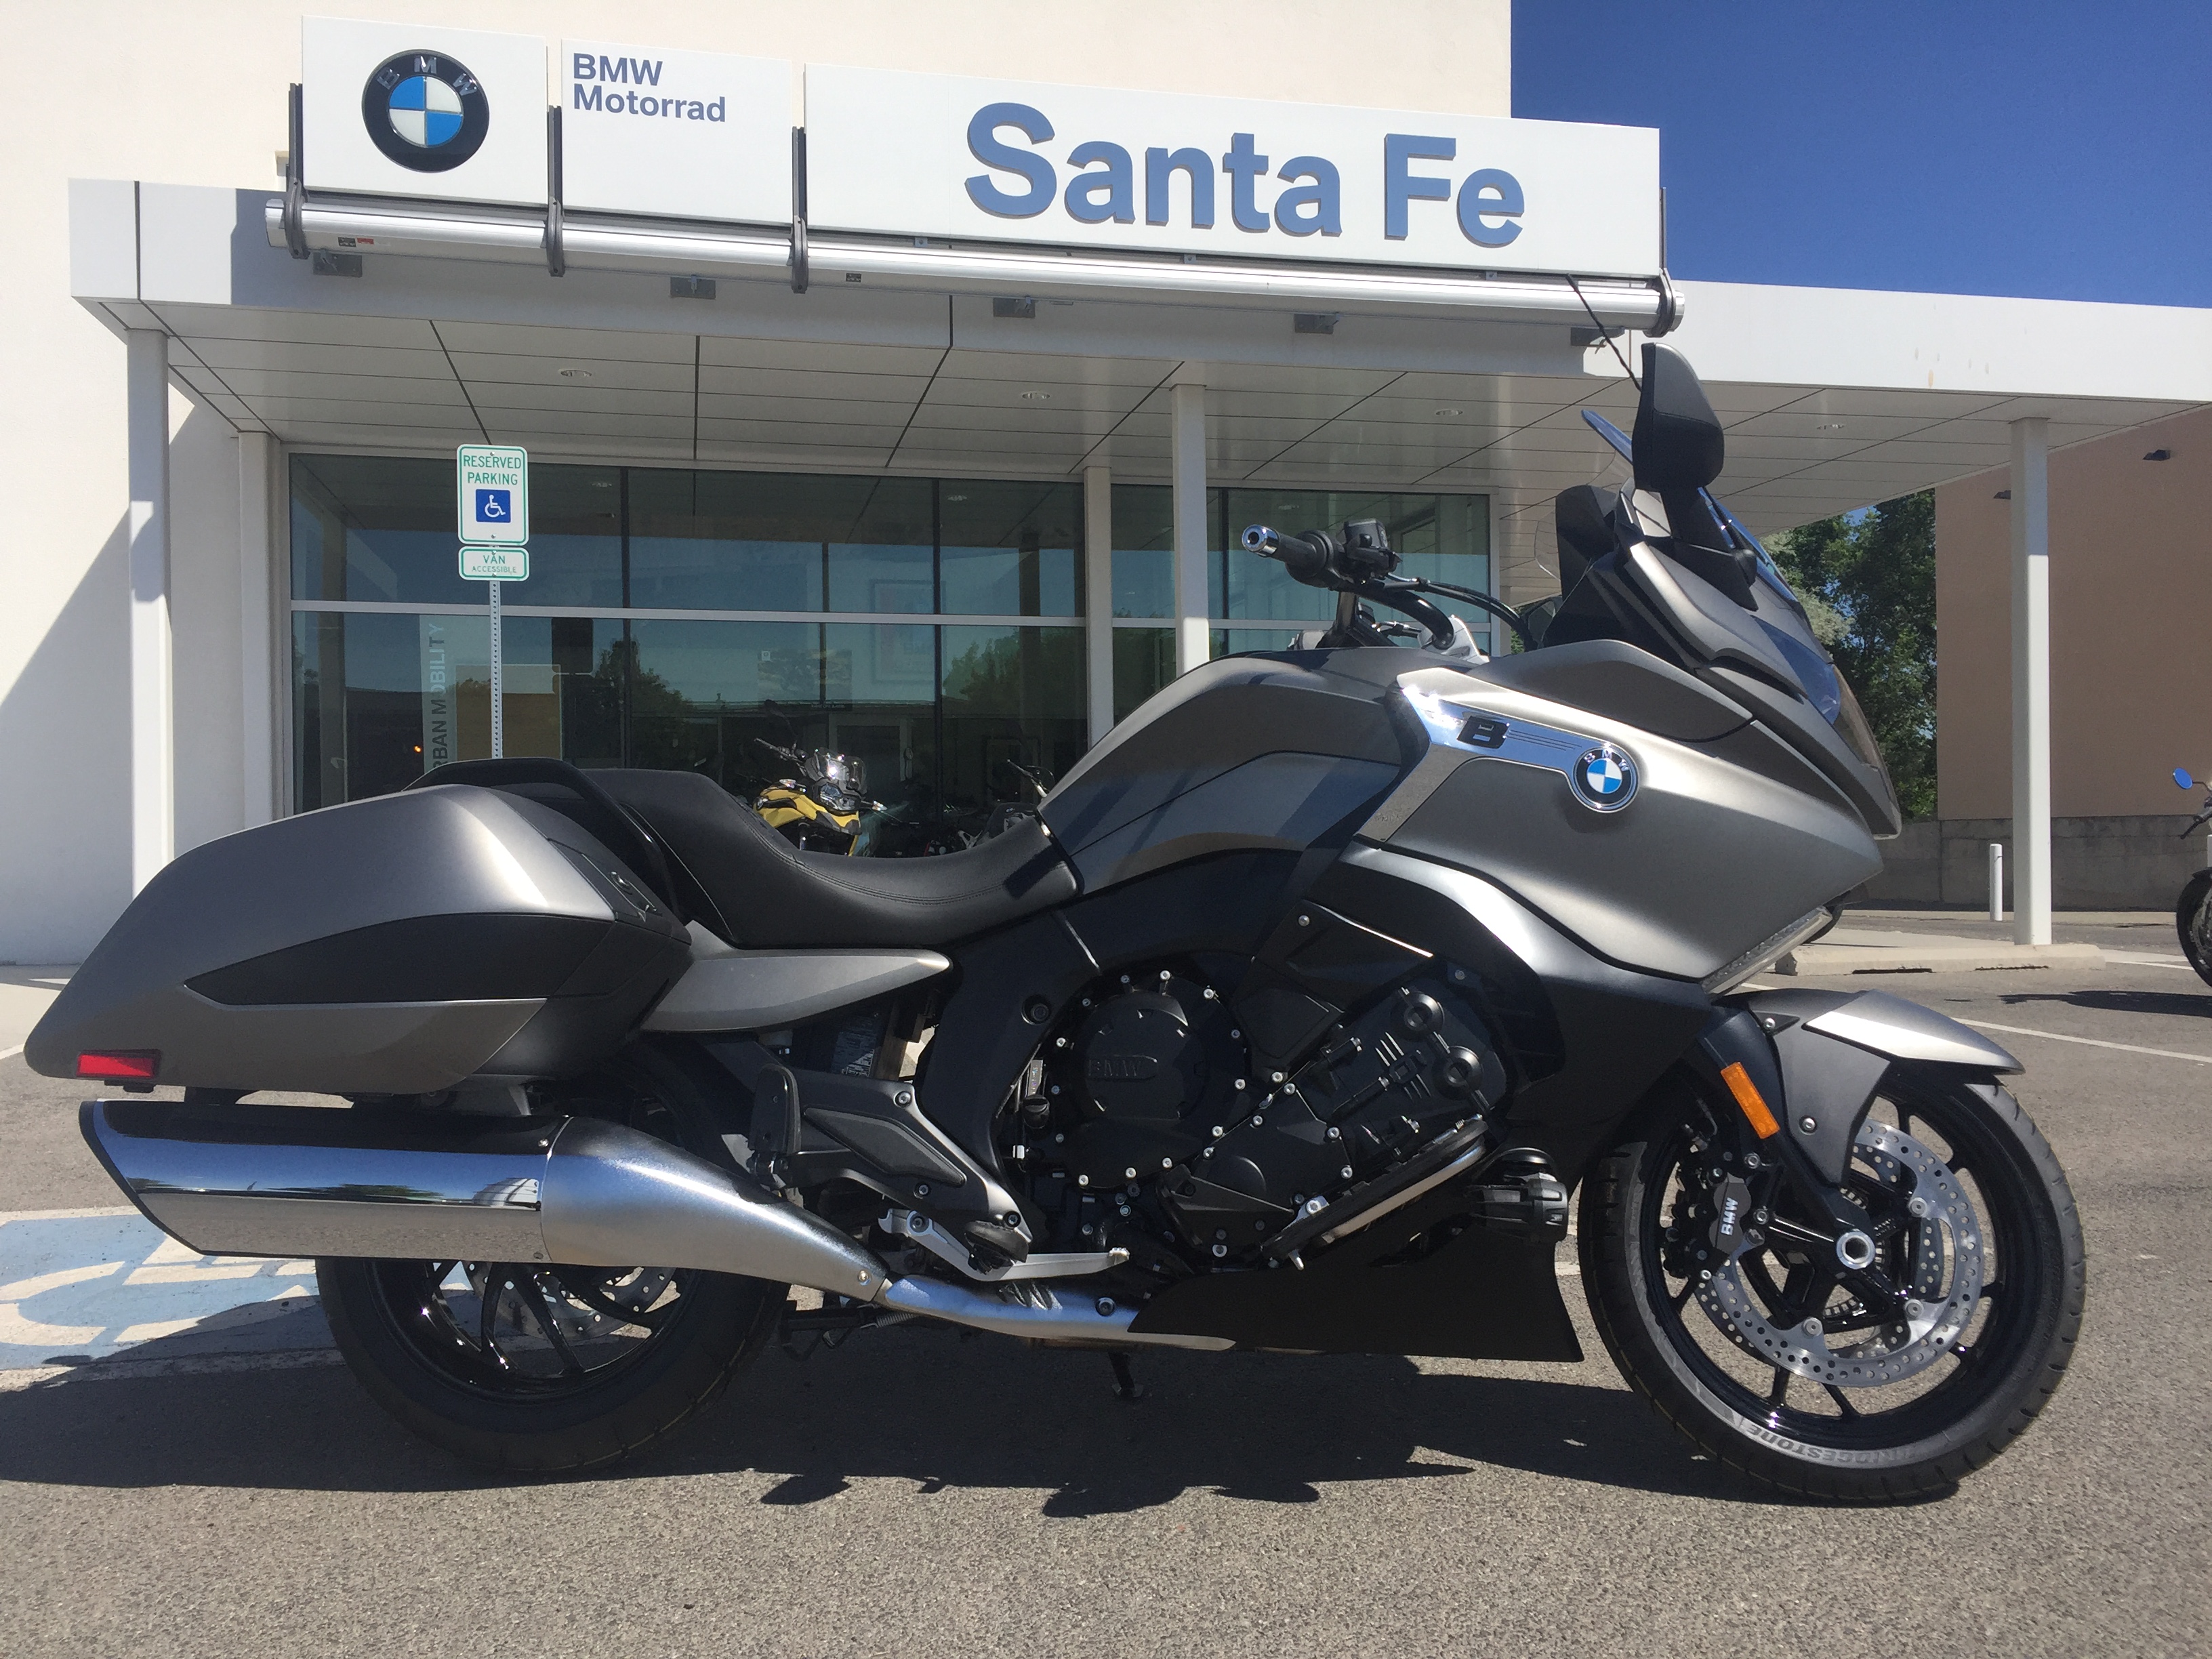 New BMW Motorcycles - K1600B | Santa Fe BMW Motorcycles | Santa Fe, NM